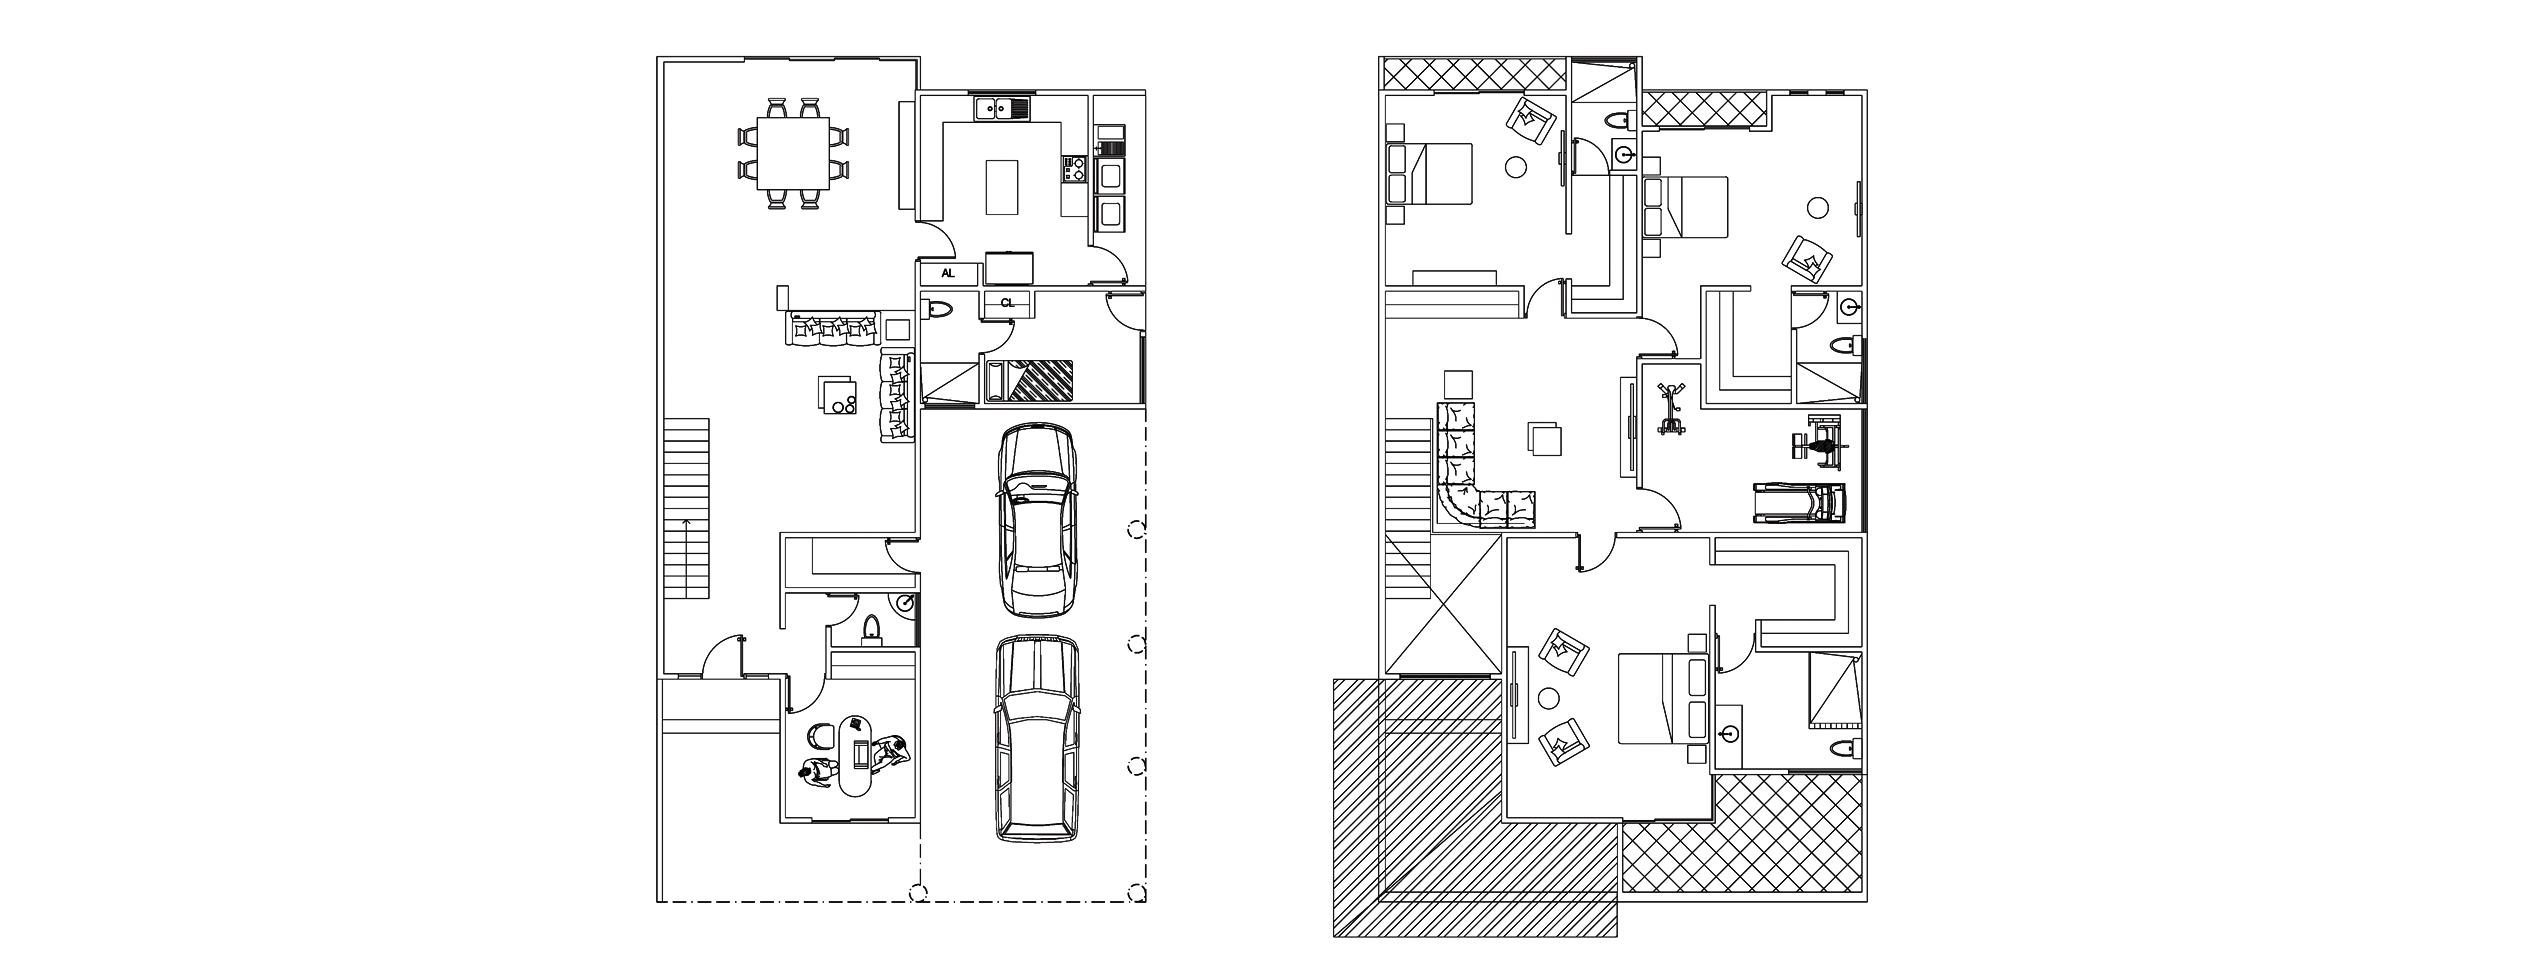 http://www.dwgnet.com/wp-content/uploads/2018/03/Beautiful-Double-floor-house-plan.jpg